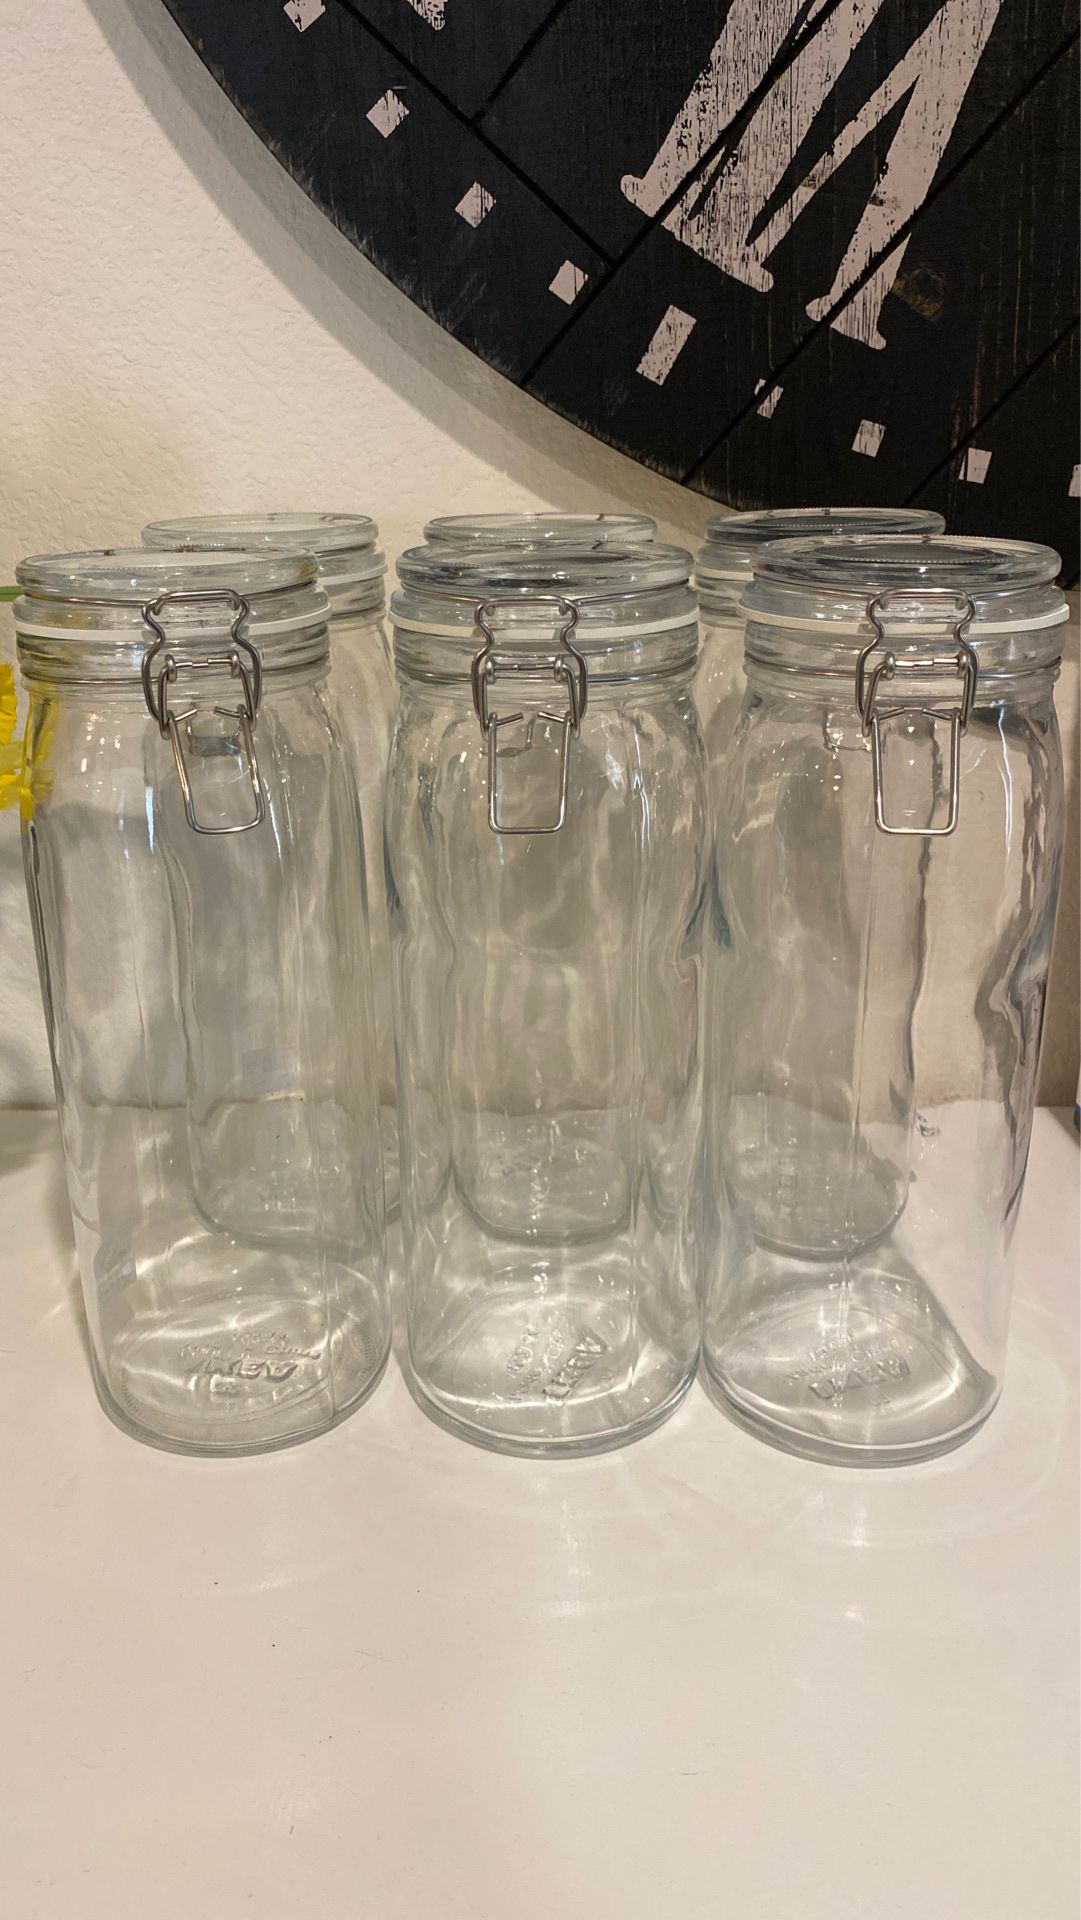 IKEA glass jars set of 5 for $15